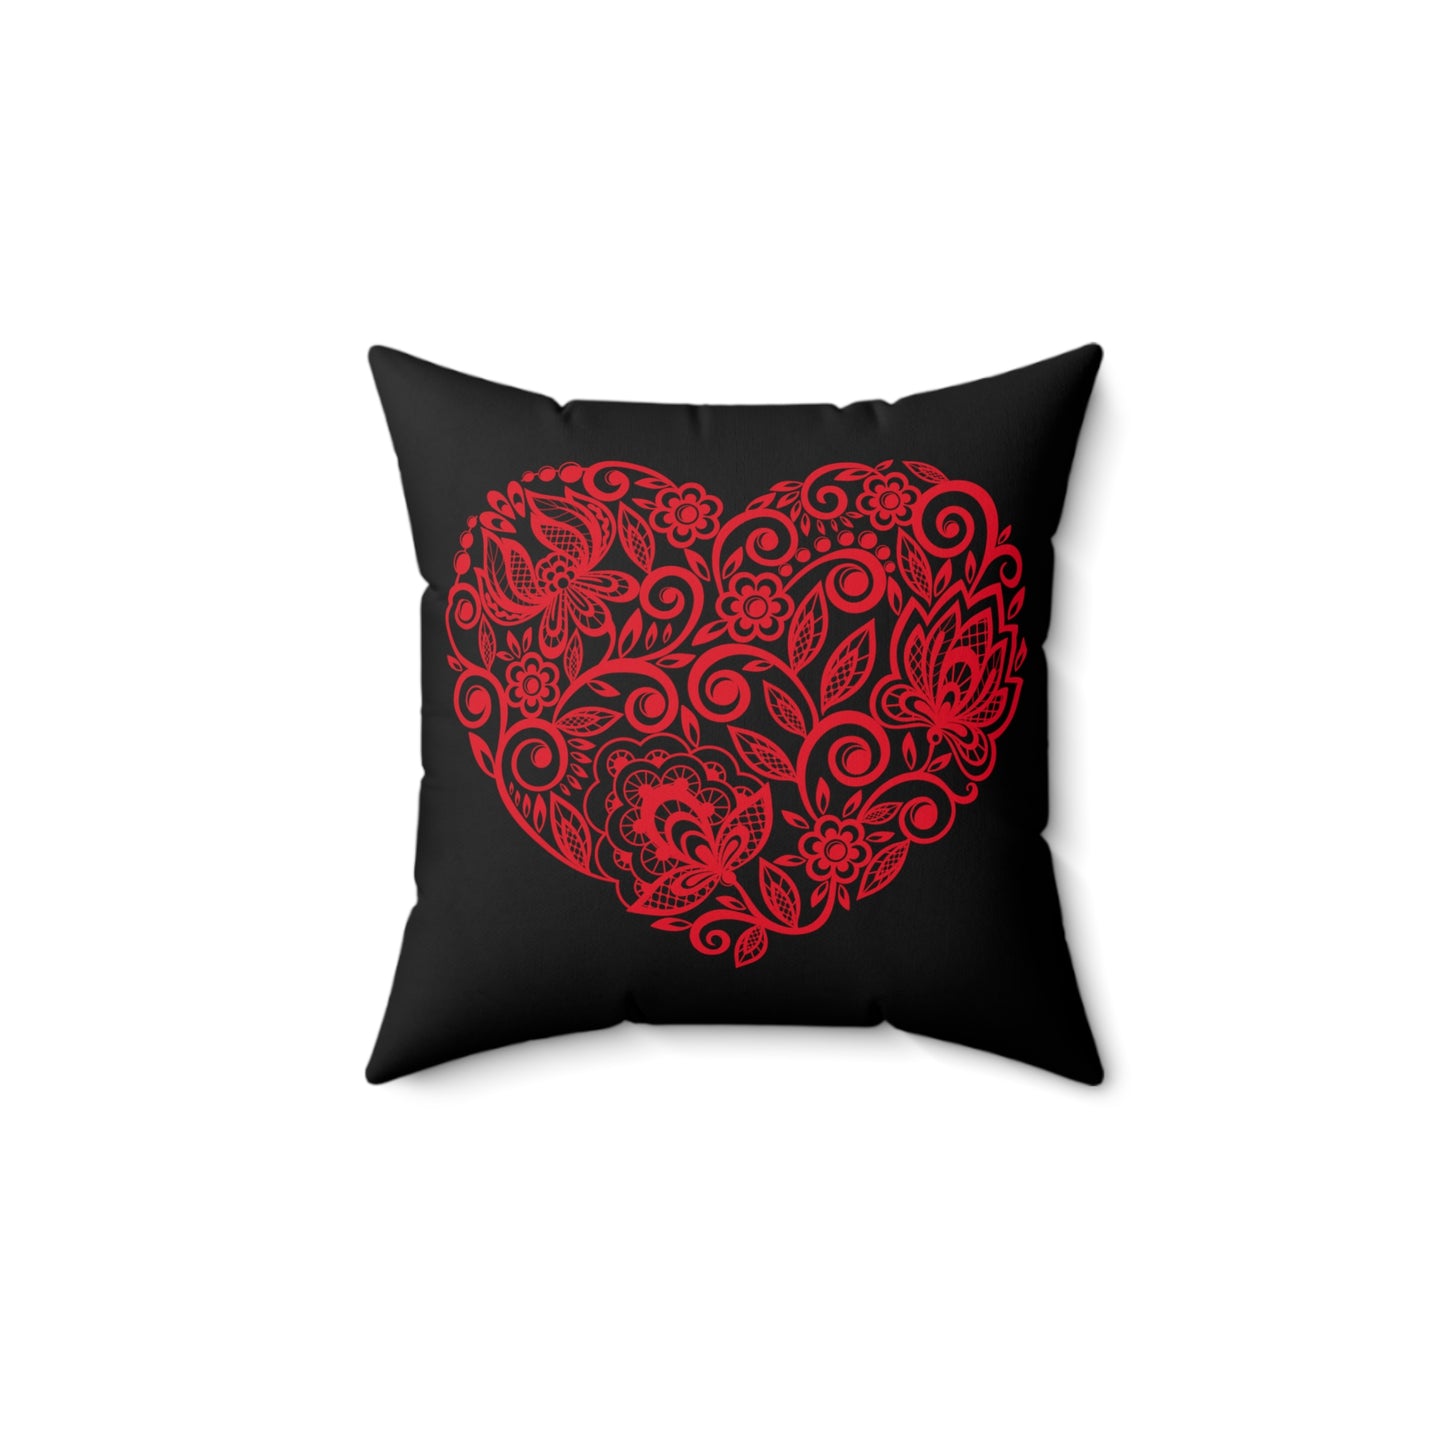 Decorator Pillow - Elegant Heart Design Spun Polyester Square Pillow